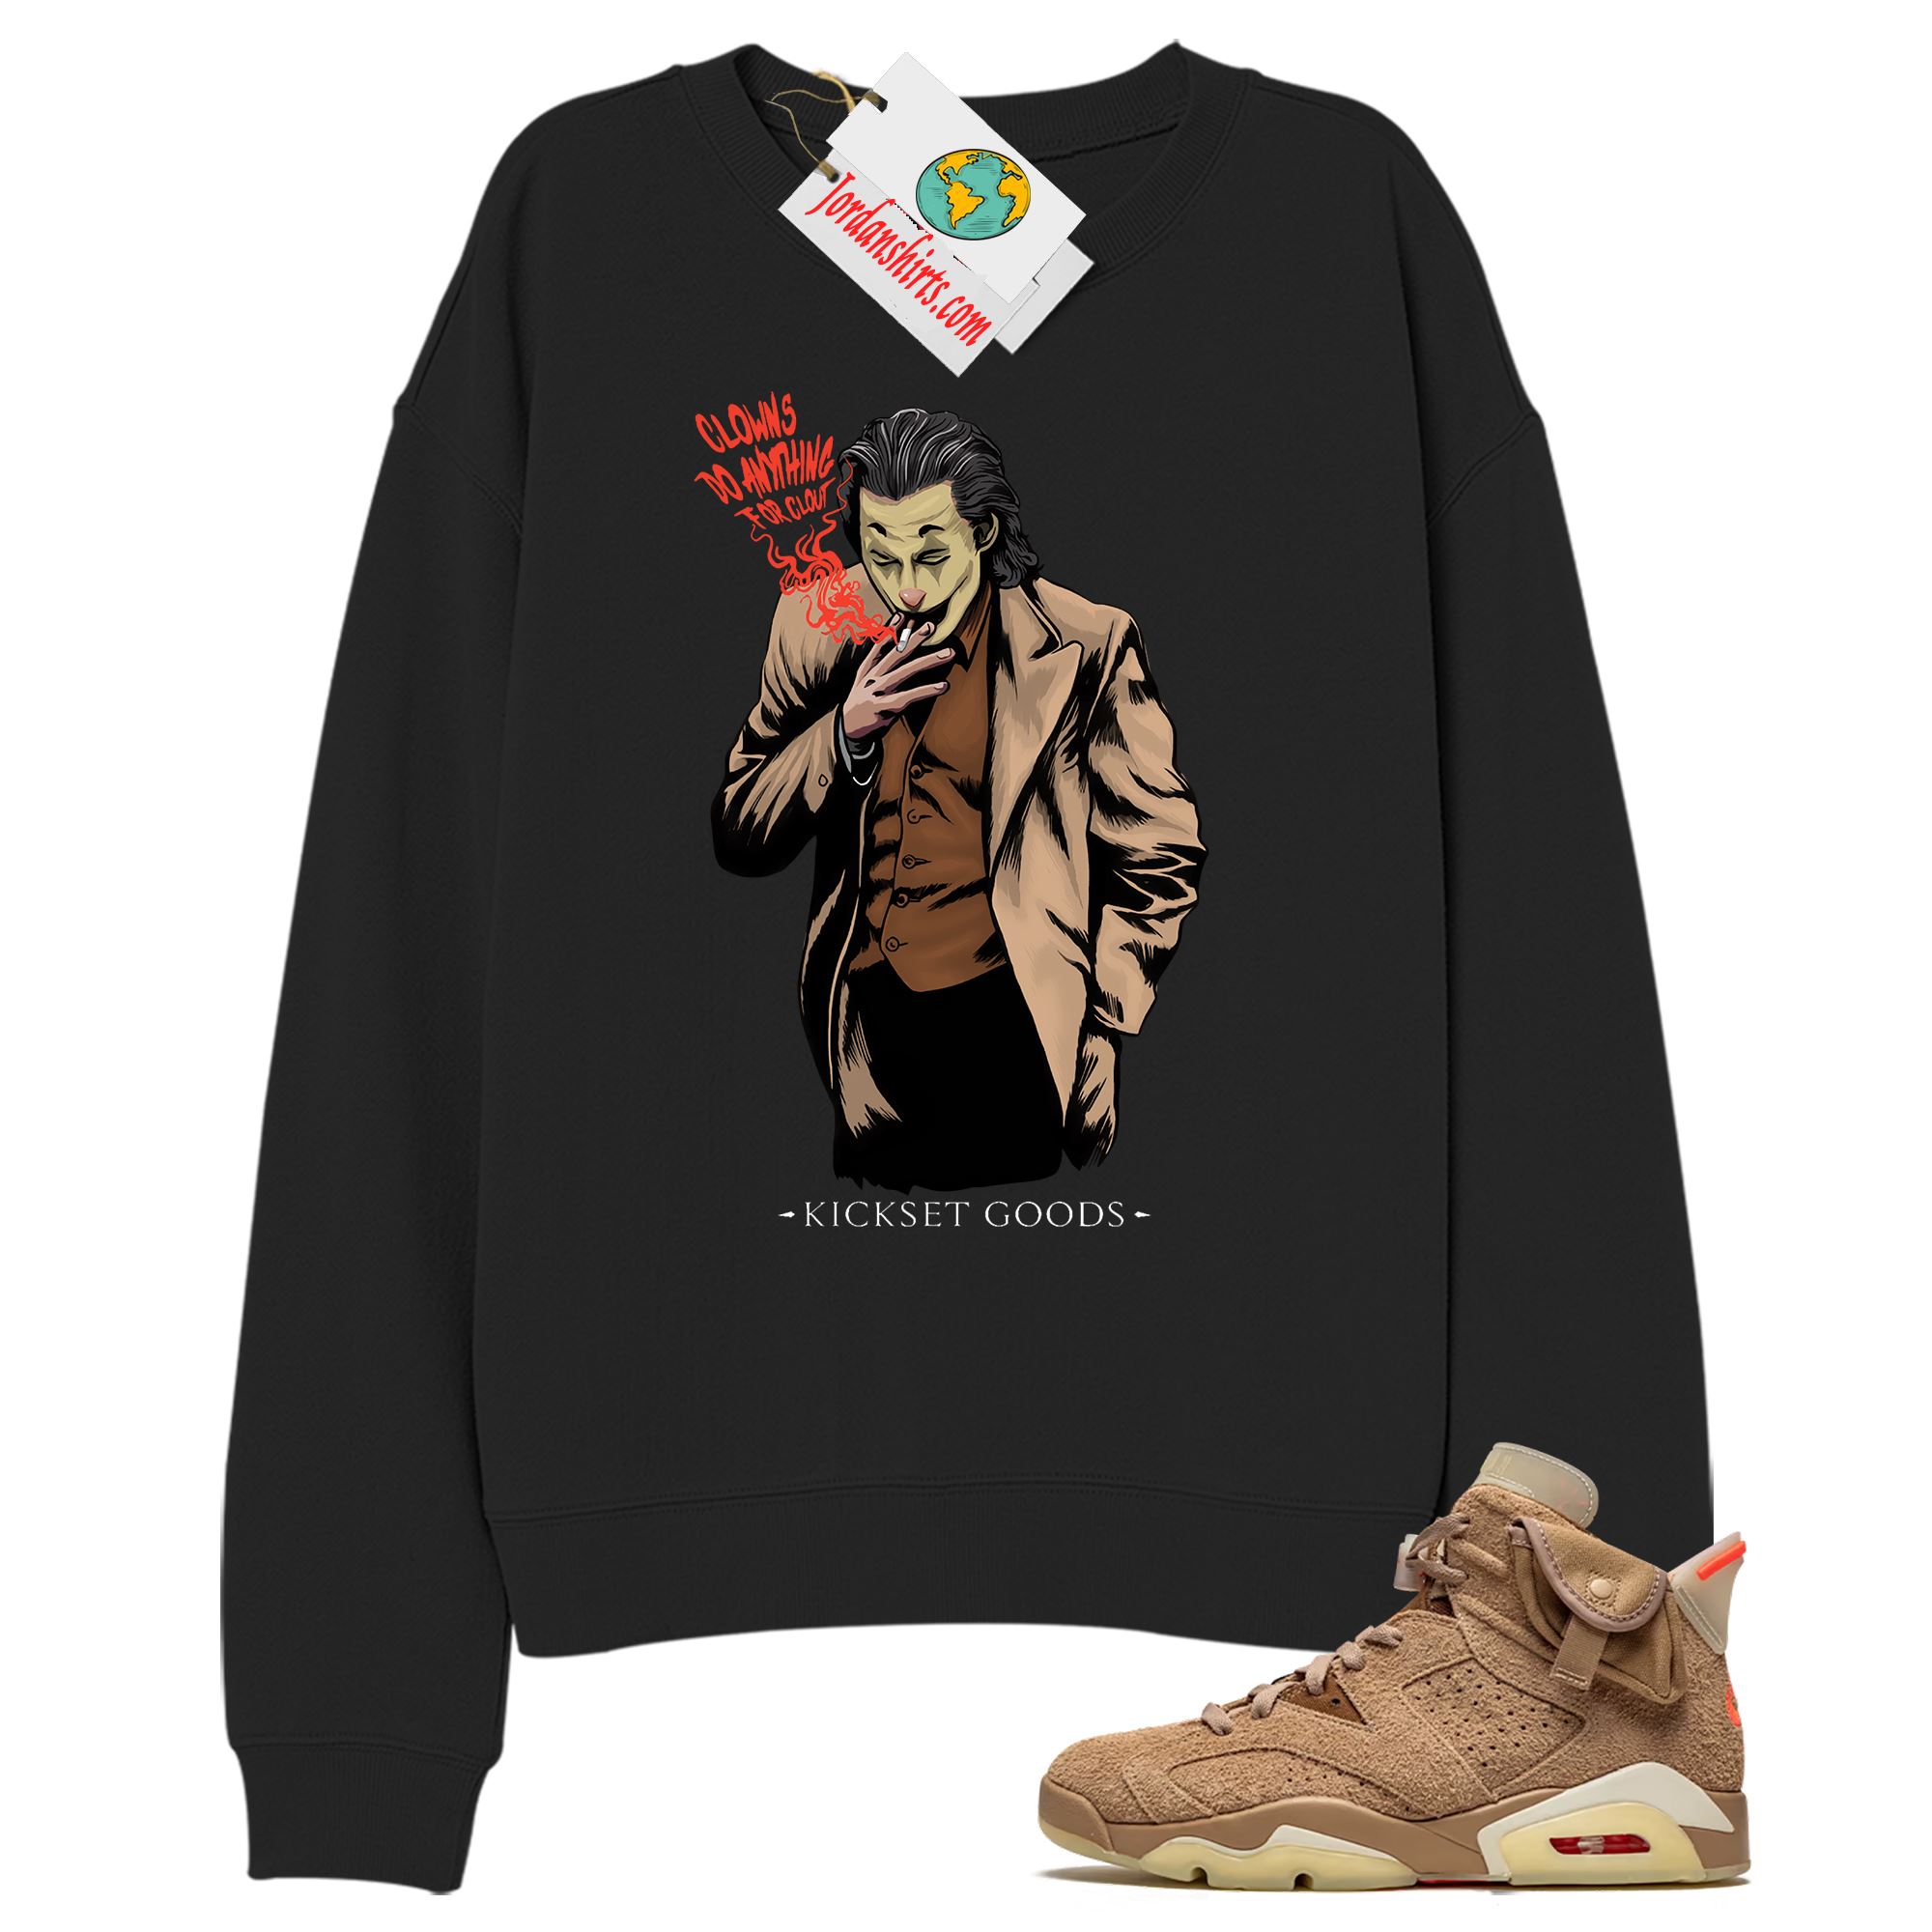 Jordan 6 Sweatshirt, Joker Black Sweatshirt Air Jordan 6 Travis Scott 6s Full Size Up To 5xl